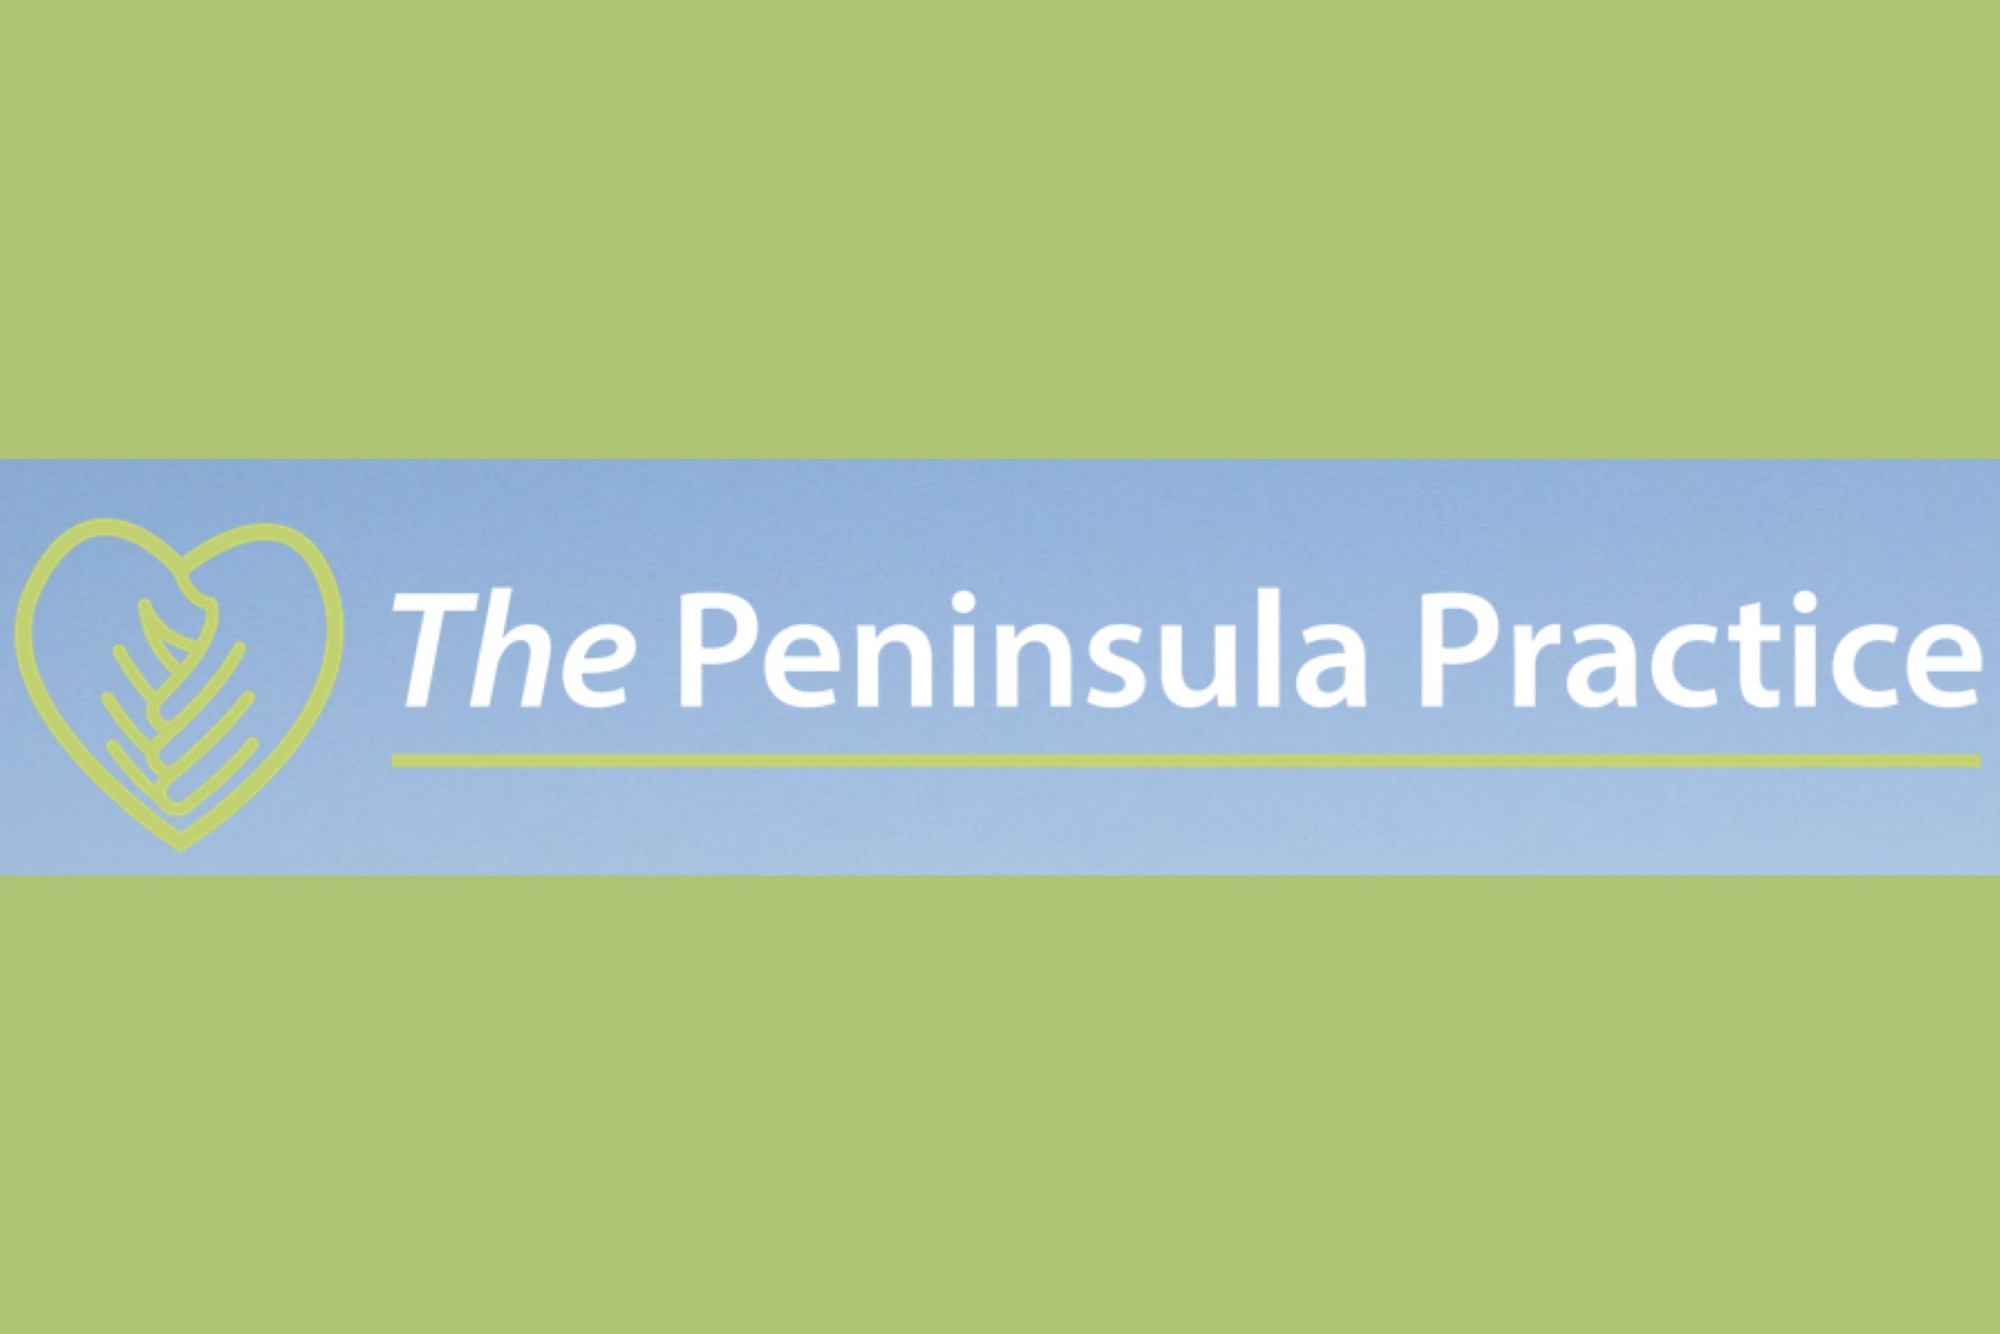 Peninsula Practice Winter News: REISSUE